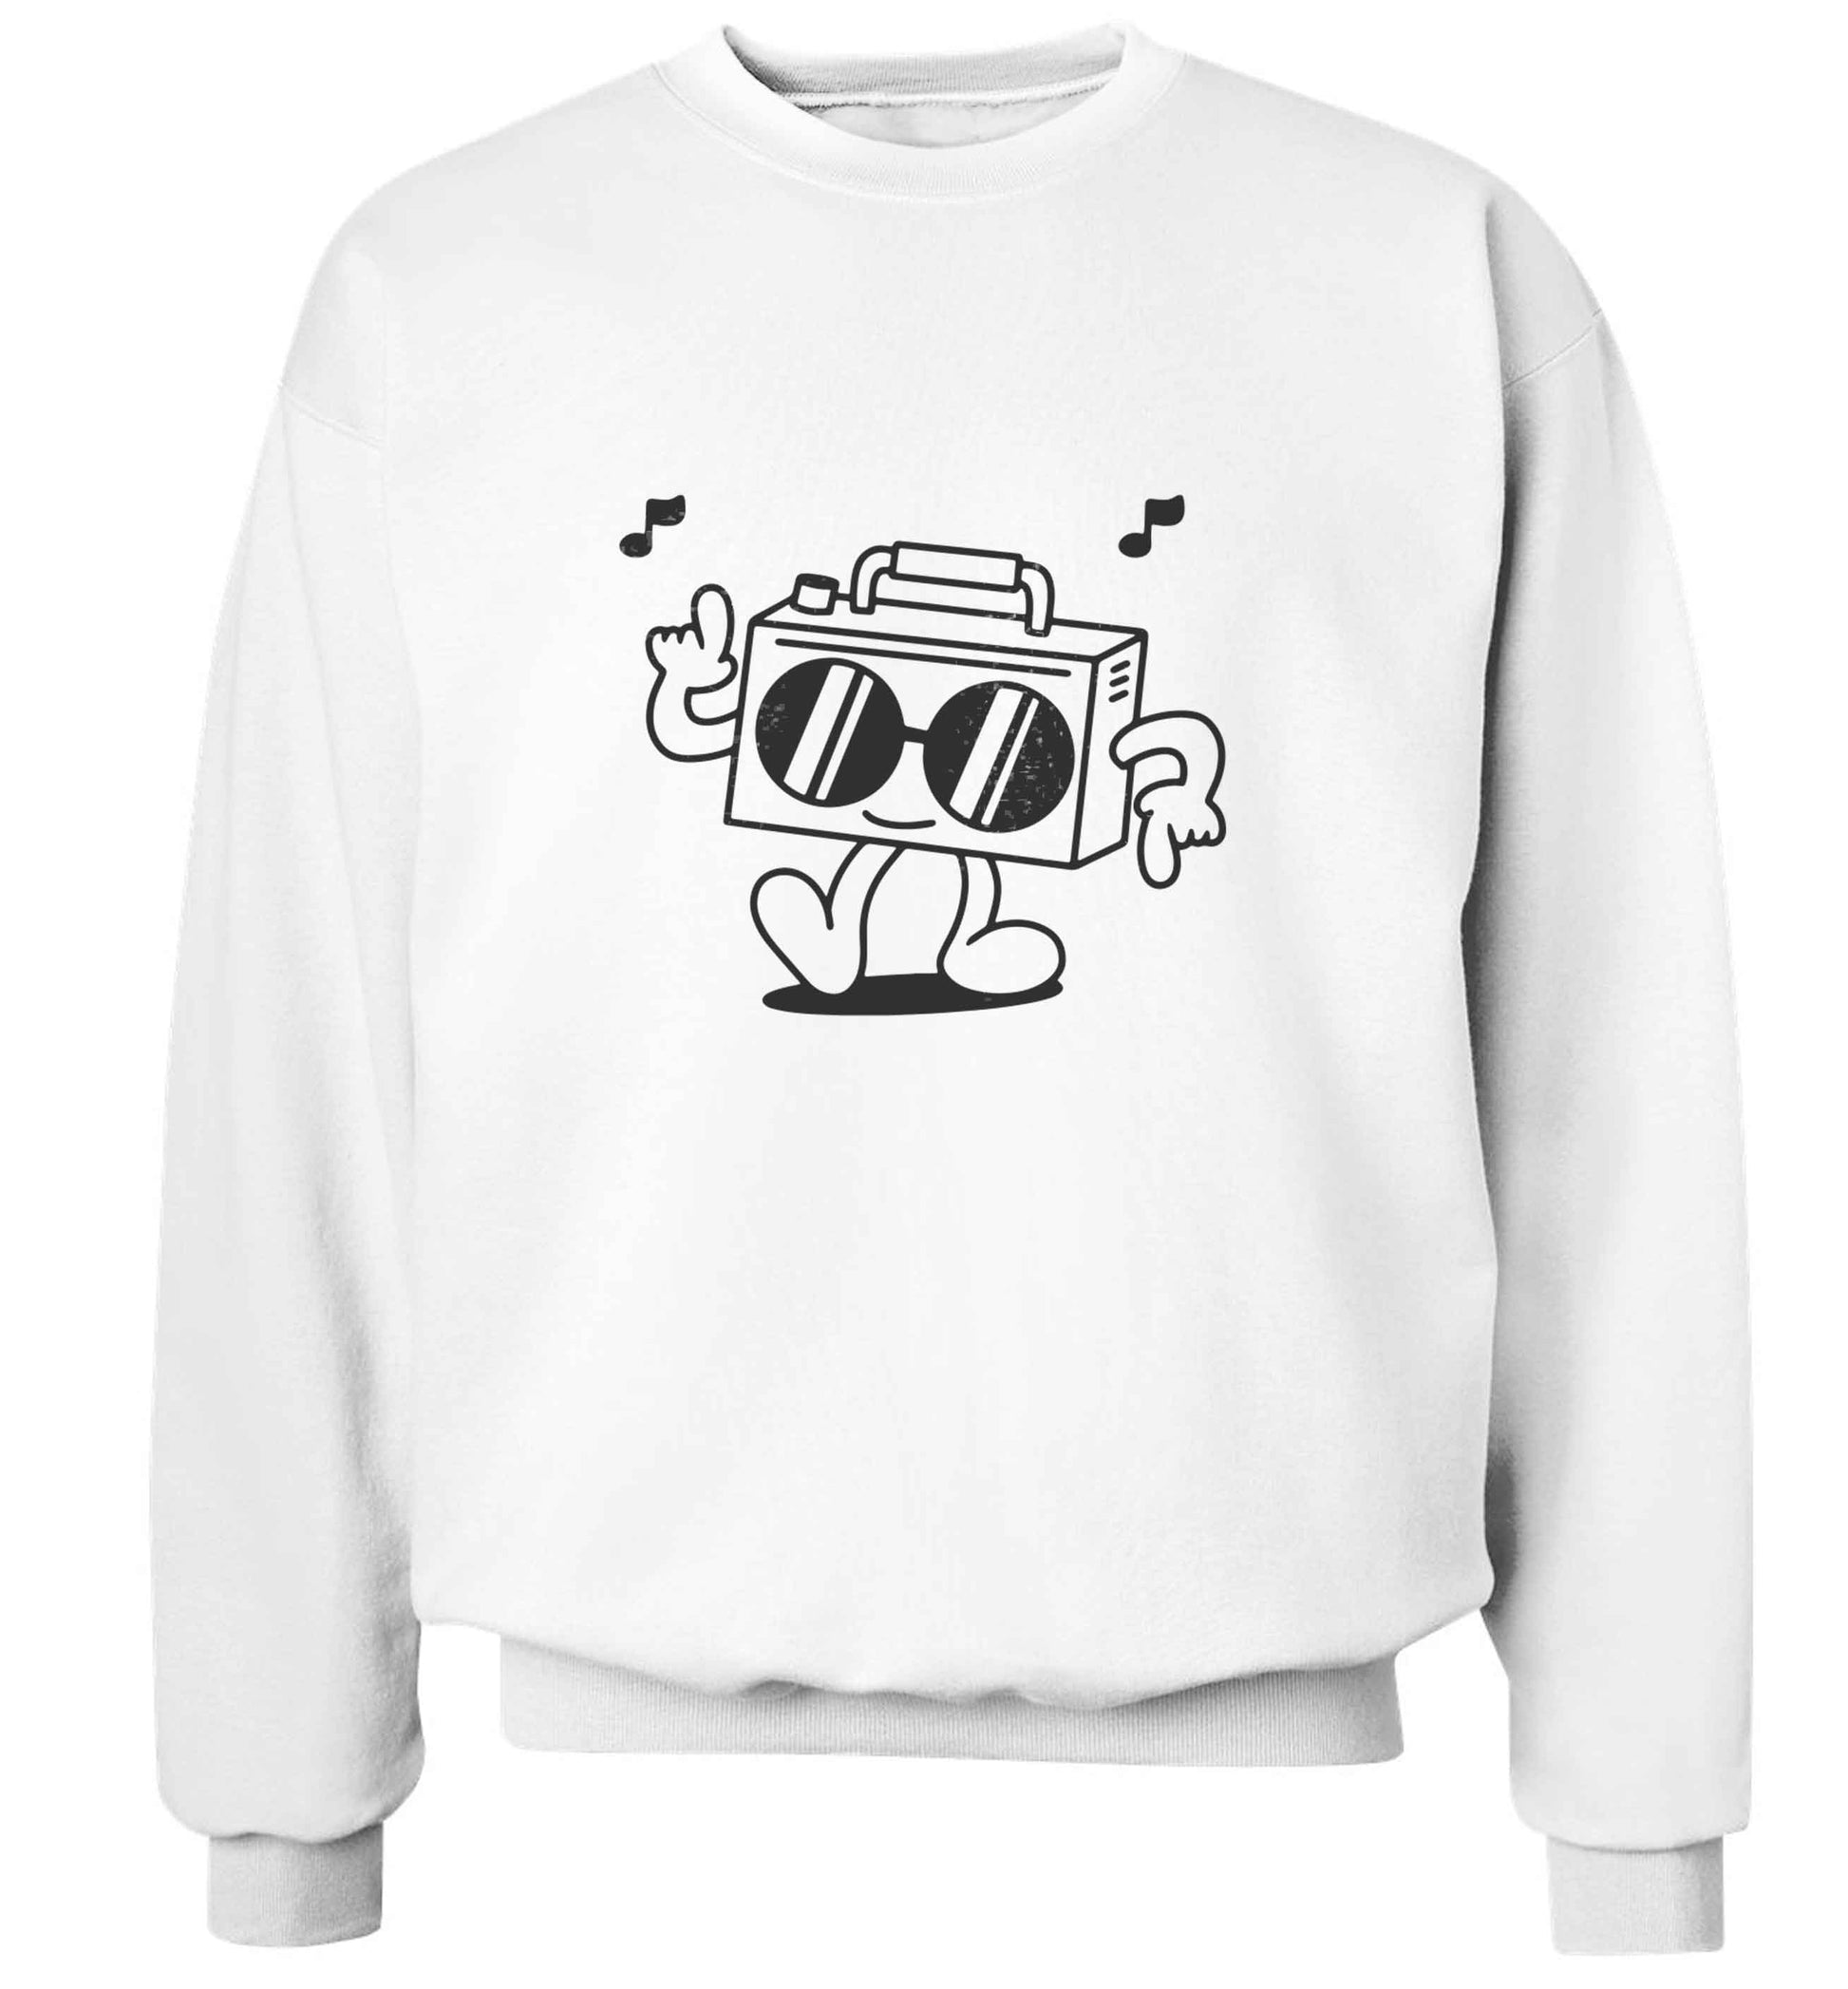 Boombox adult's unisex white sweater 2XL